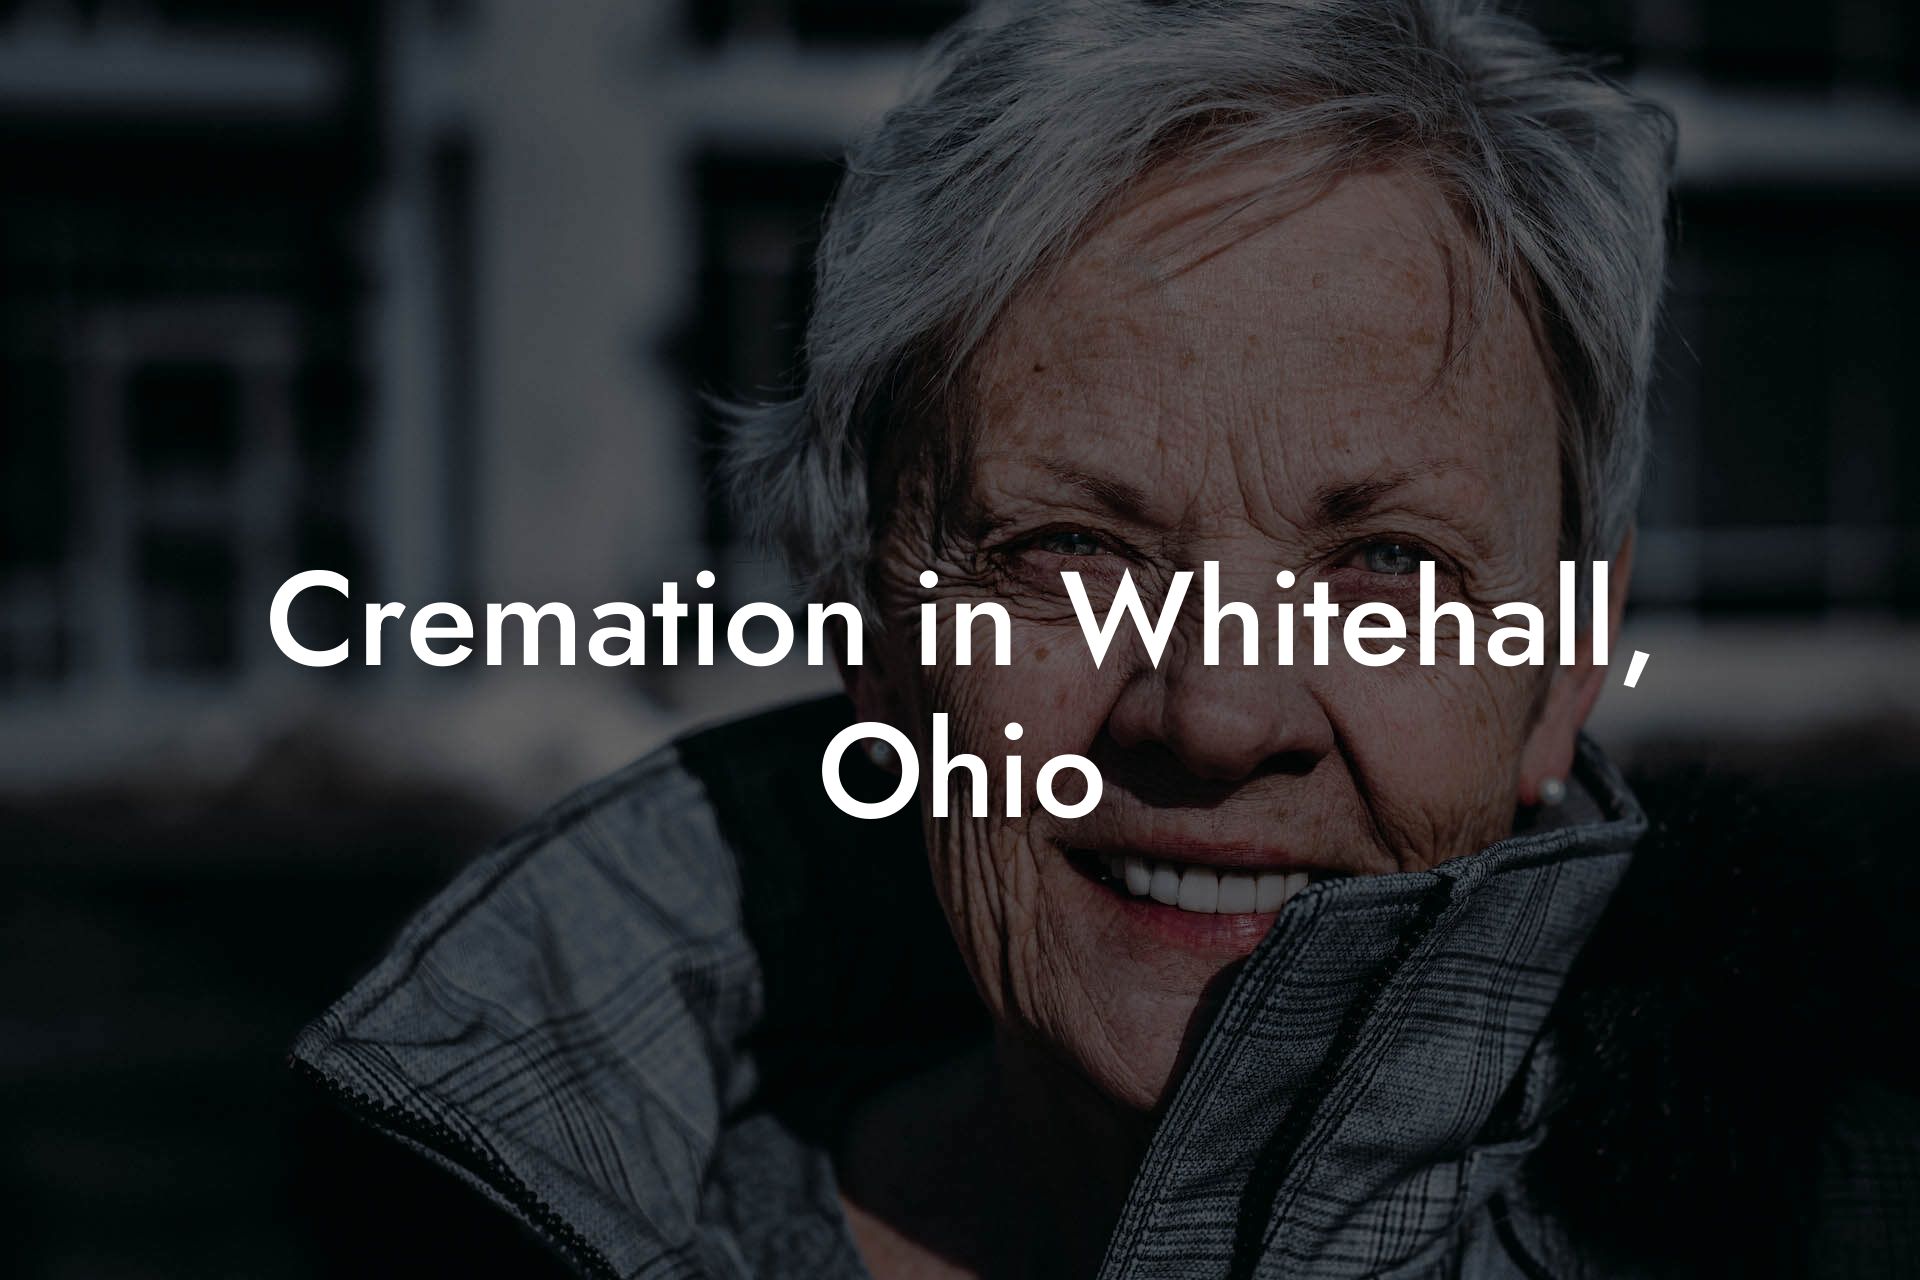 Cremation in Whitehall, Ohio